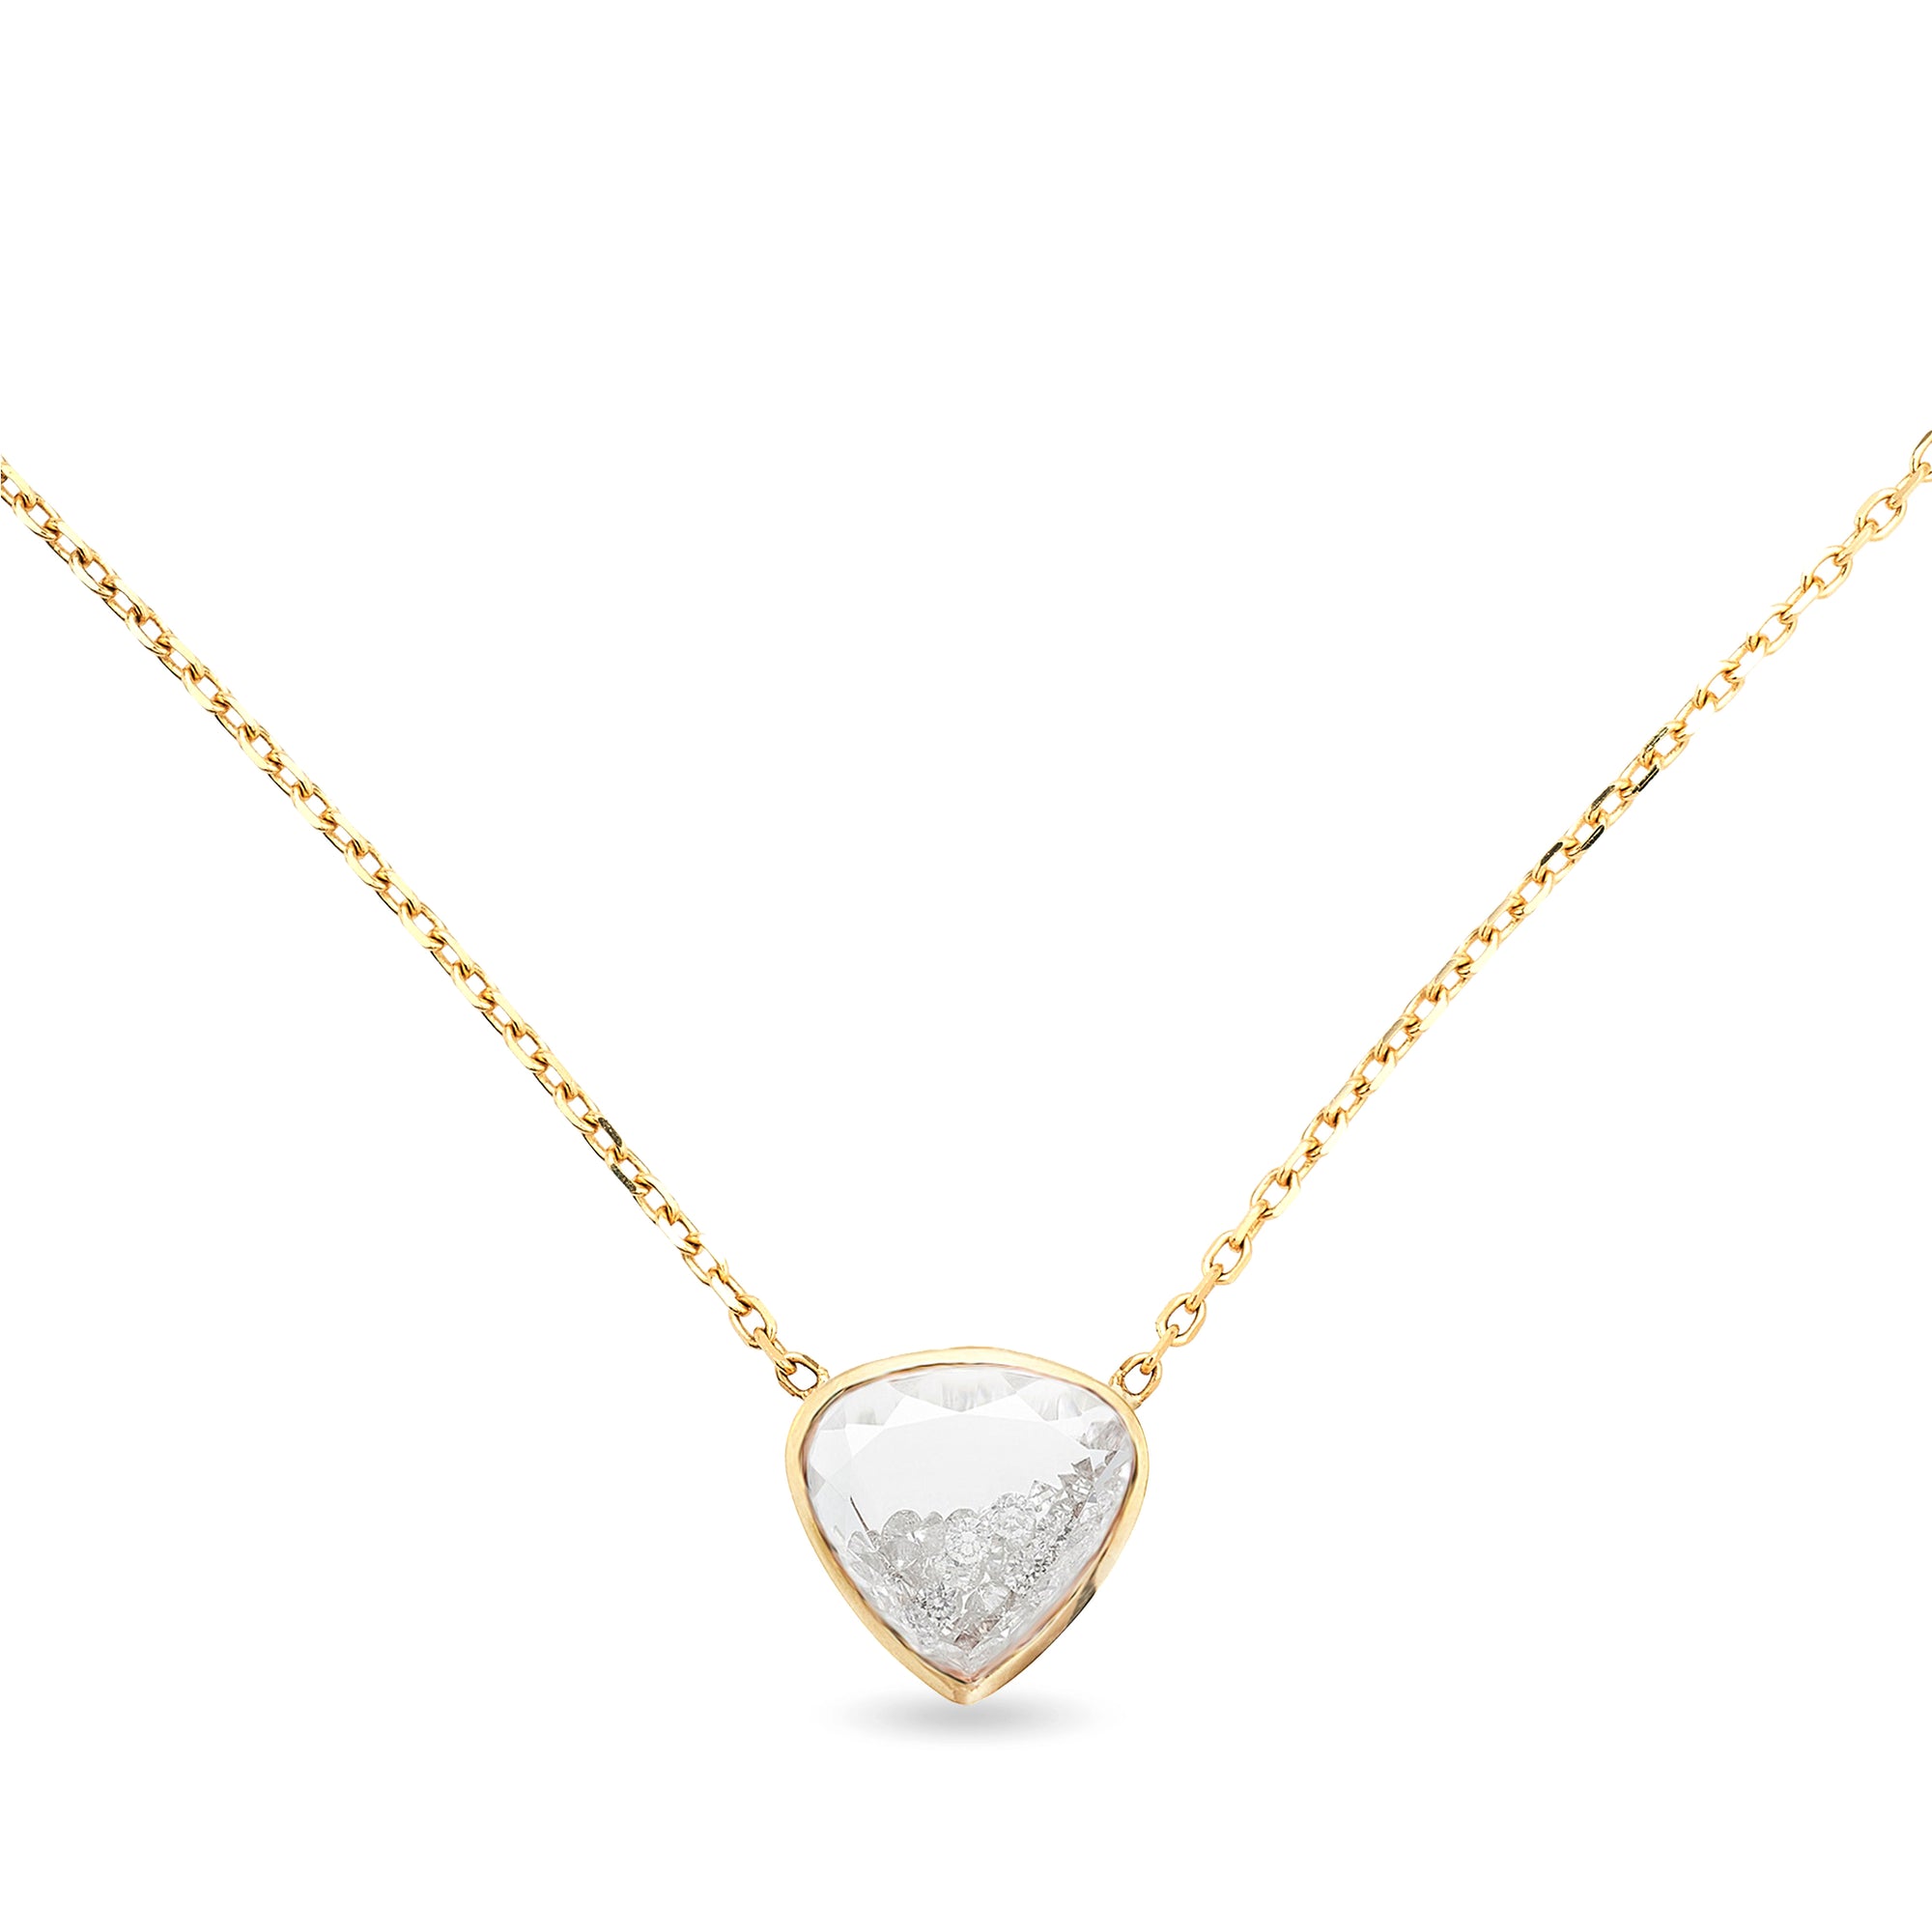 Moritz Glik - Naipe Heartish Necklace - (Yellow Gold/Diamond) view 1